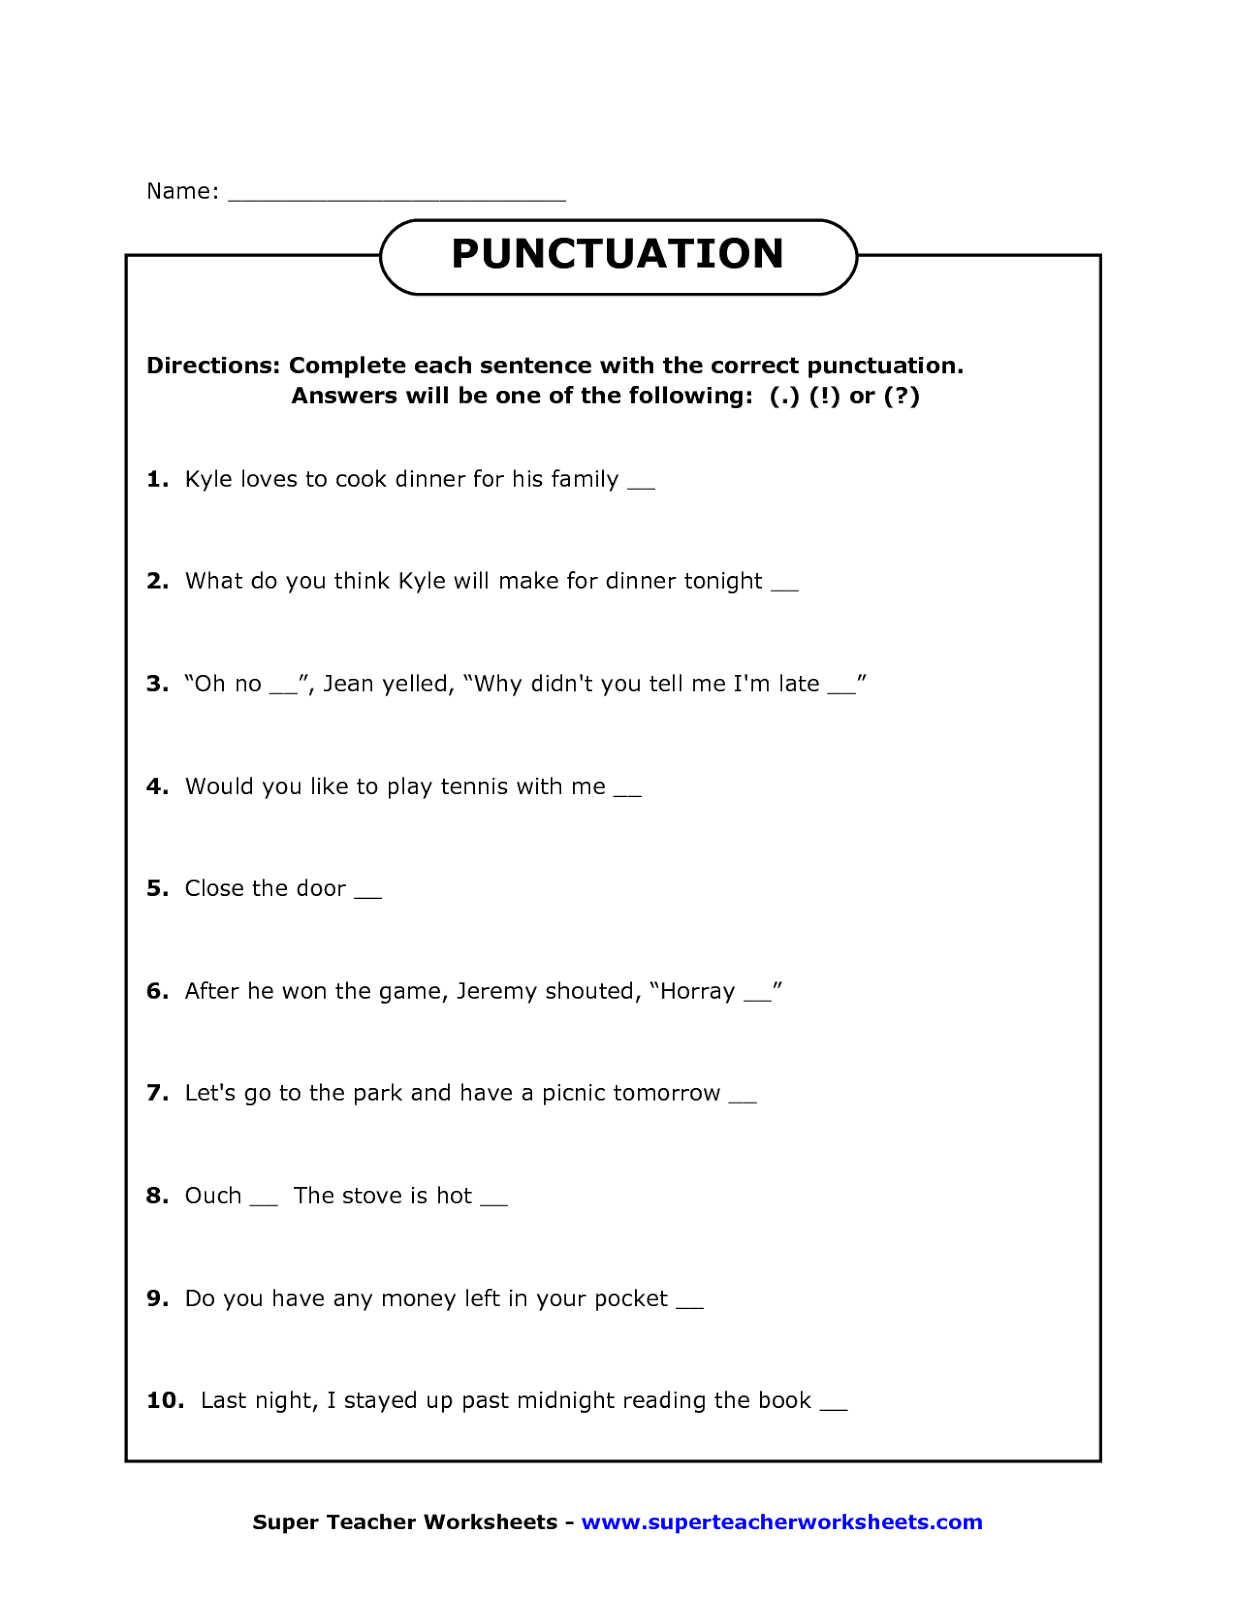 english-grade-7-punctuations